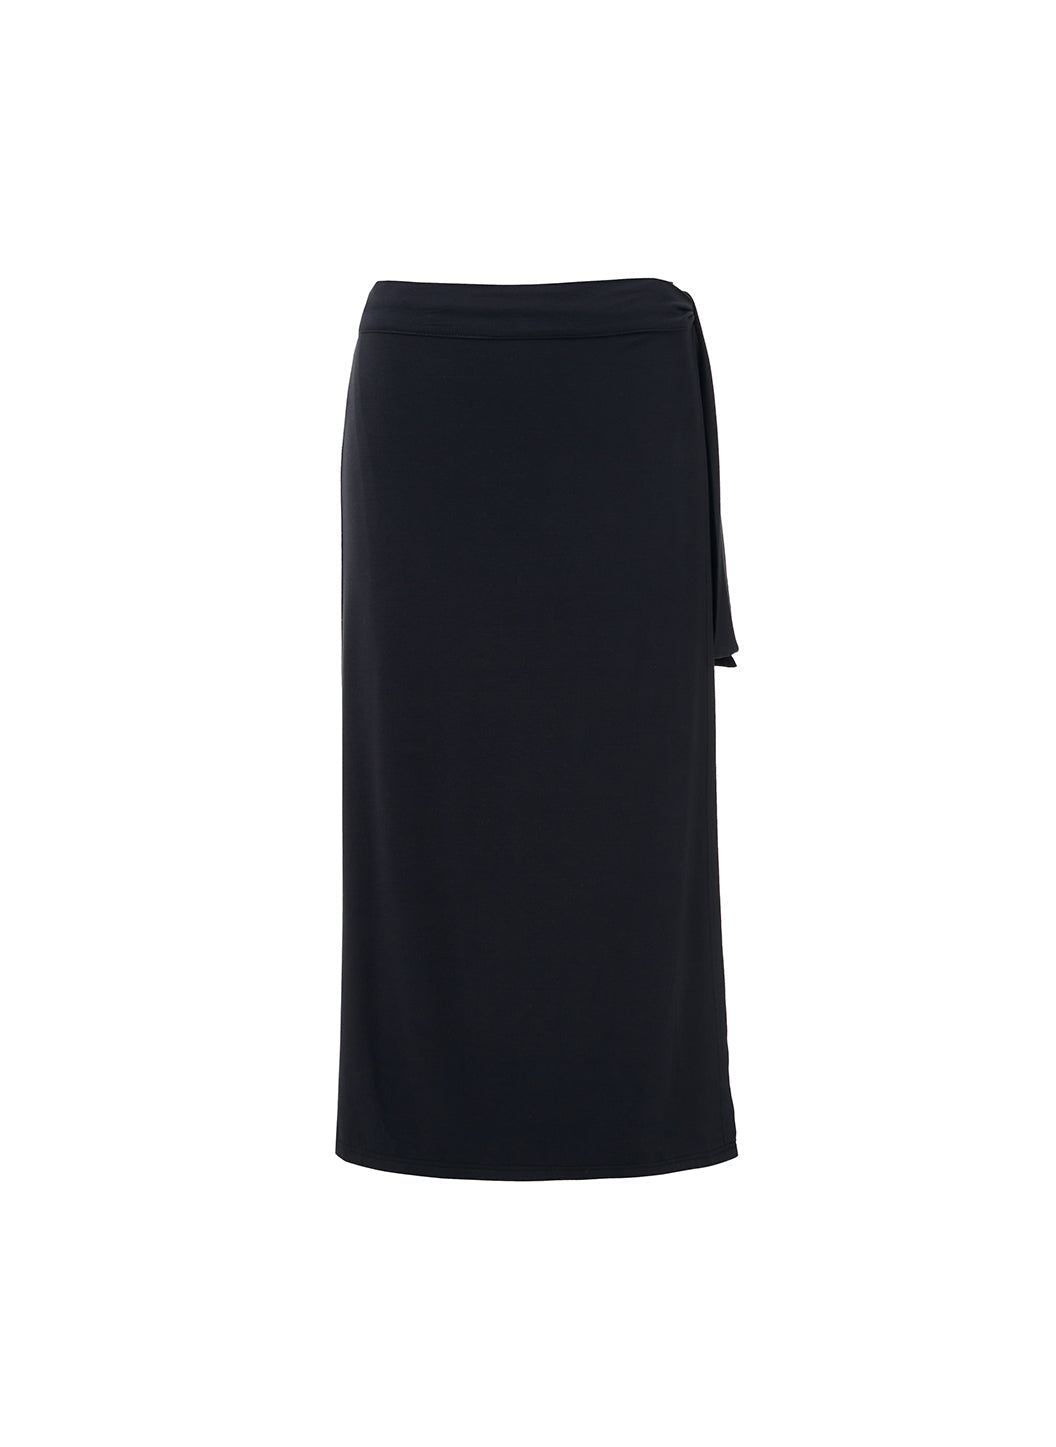 ida-black-skirt_cutout